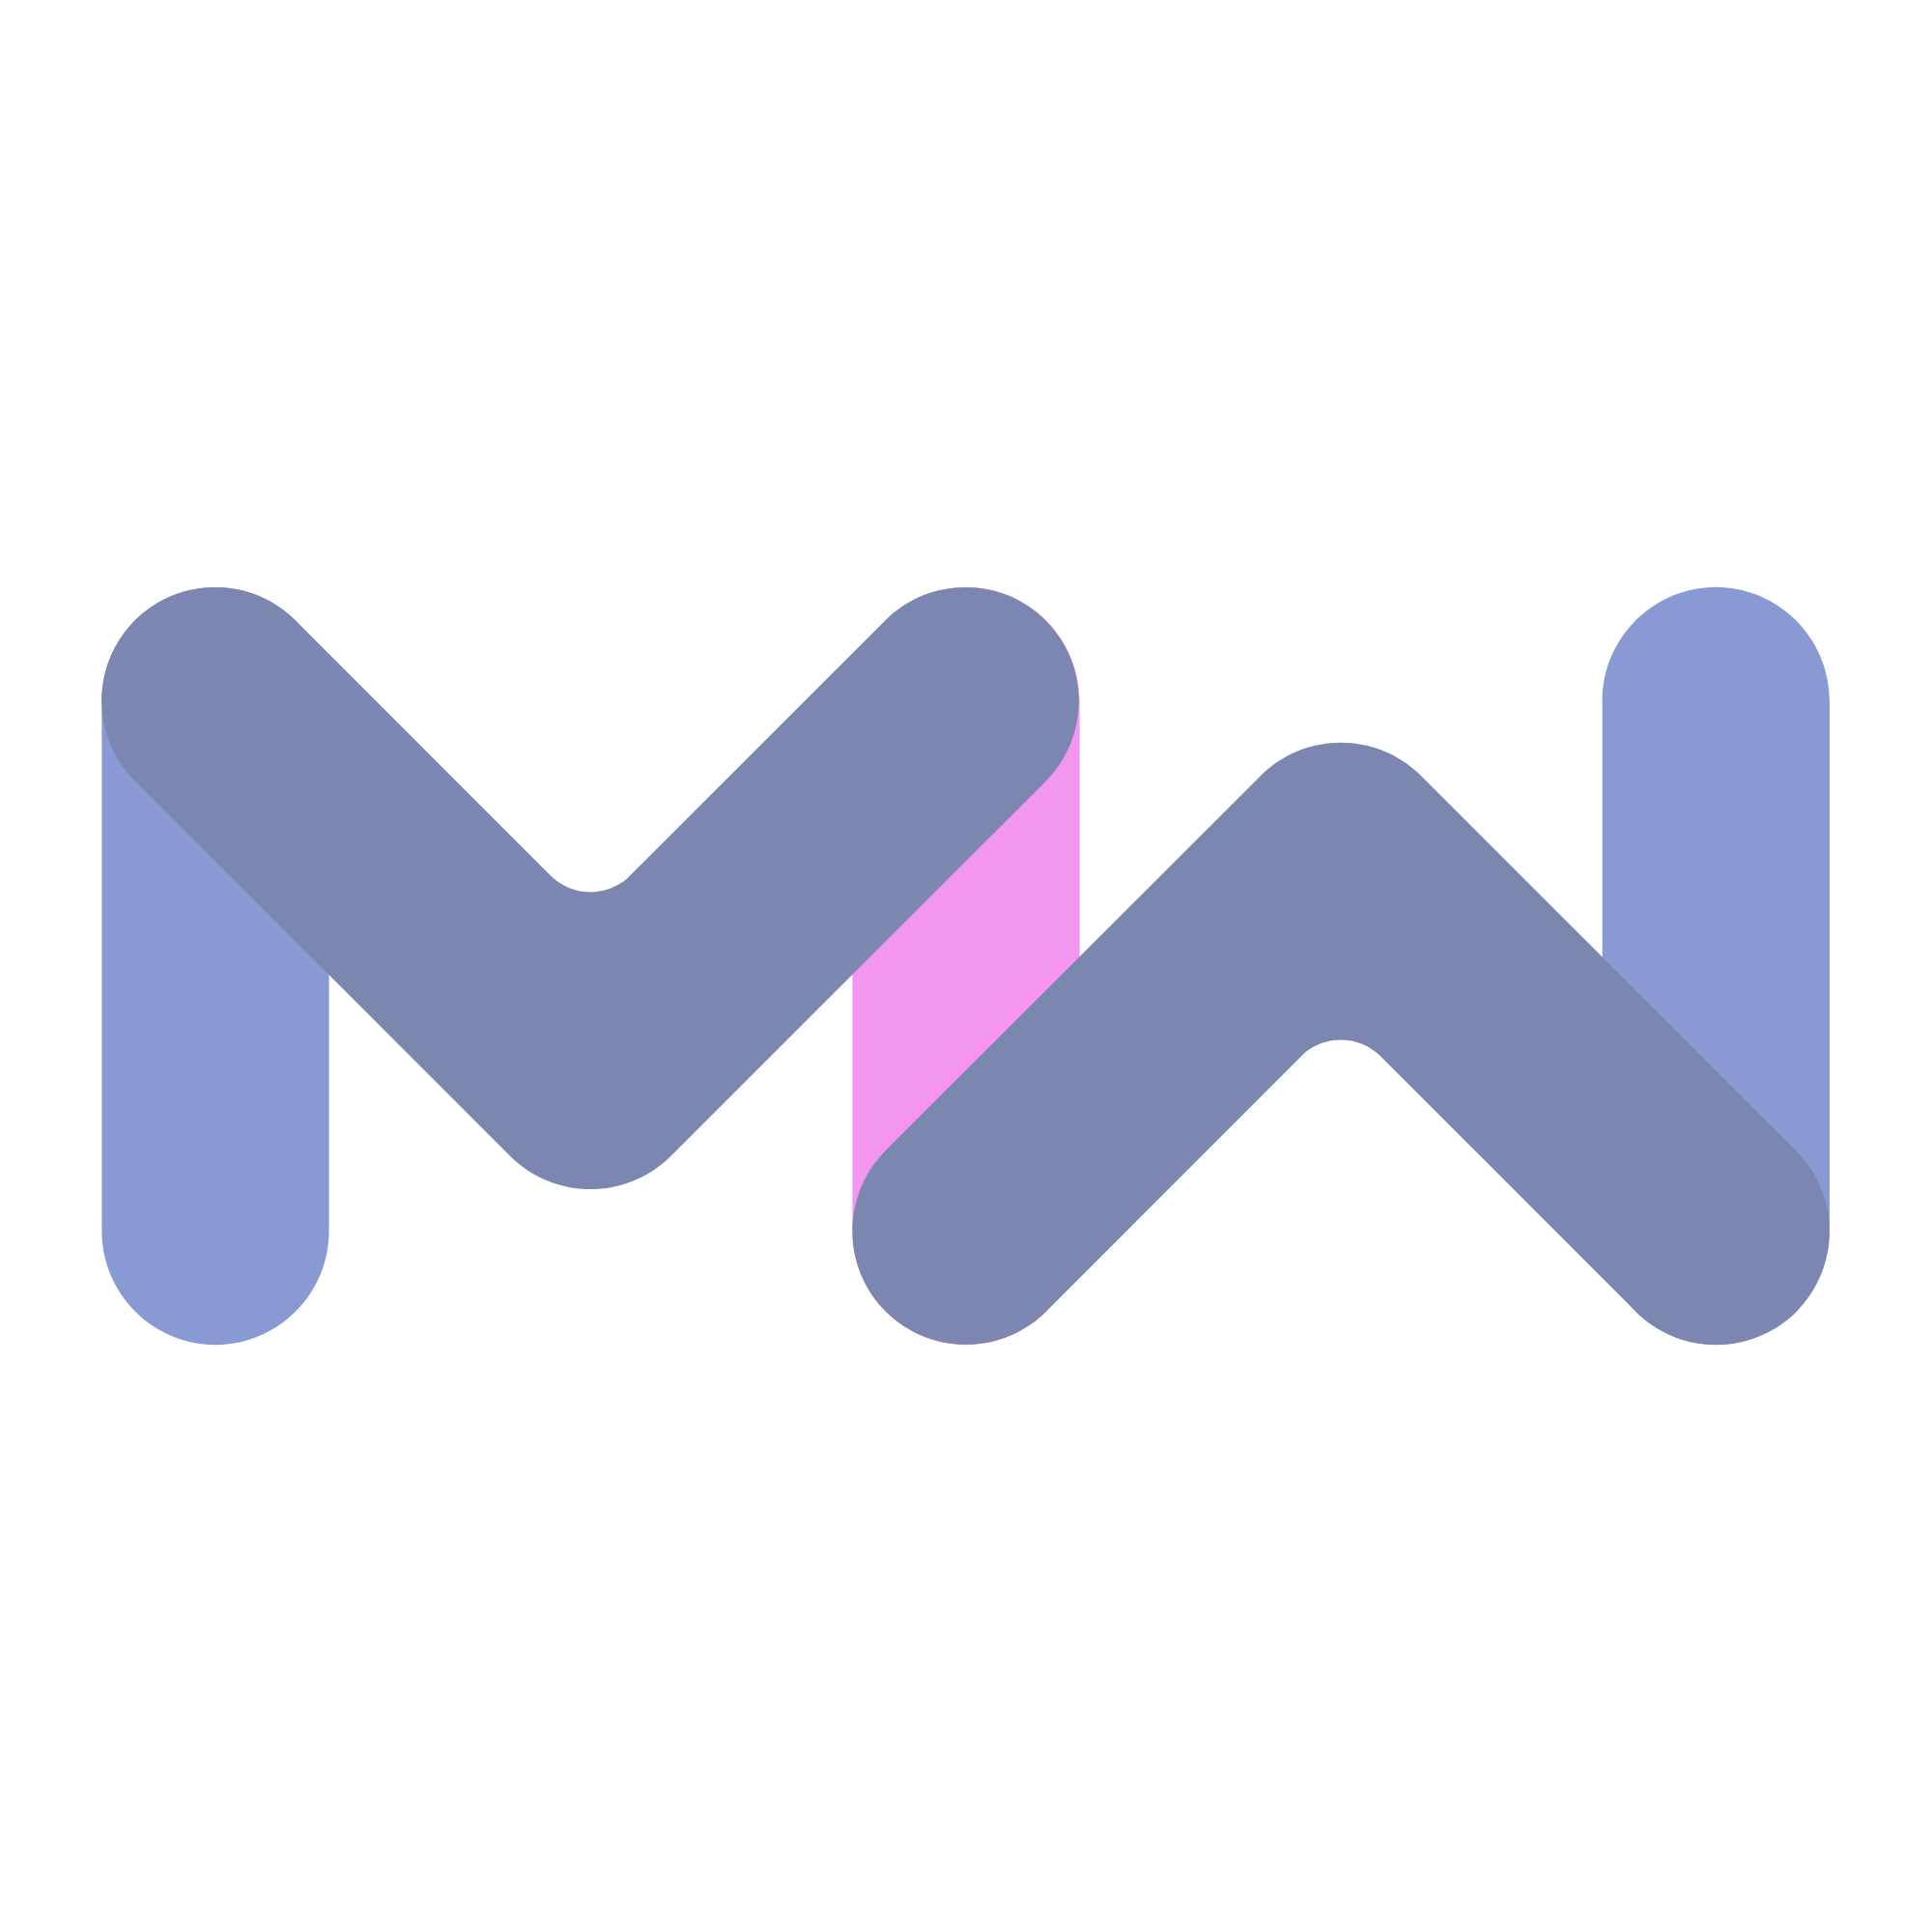 meanwood's logo